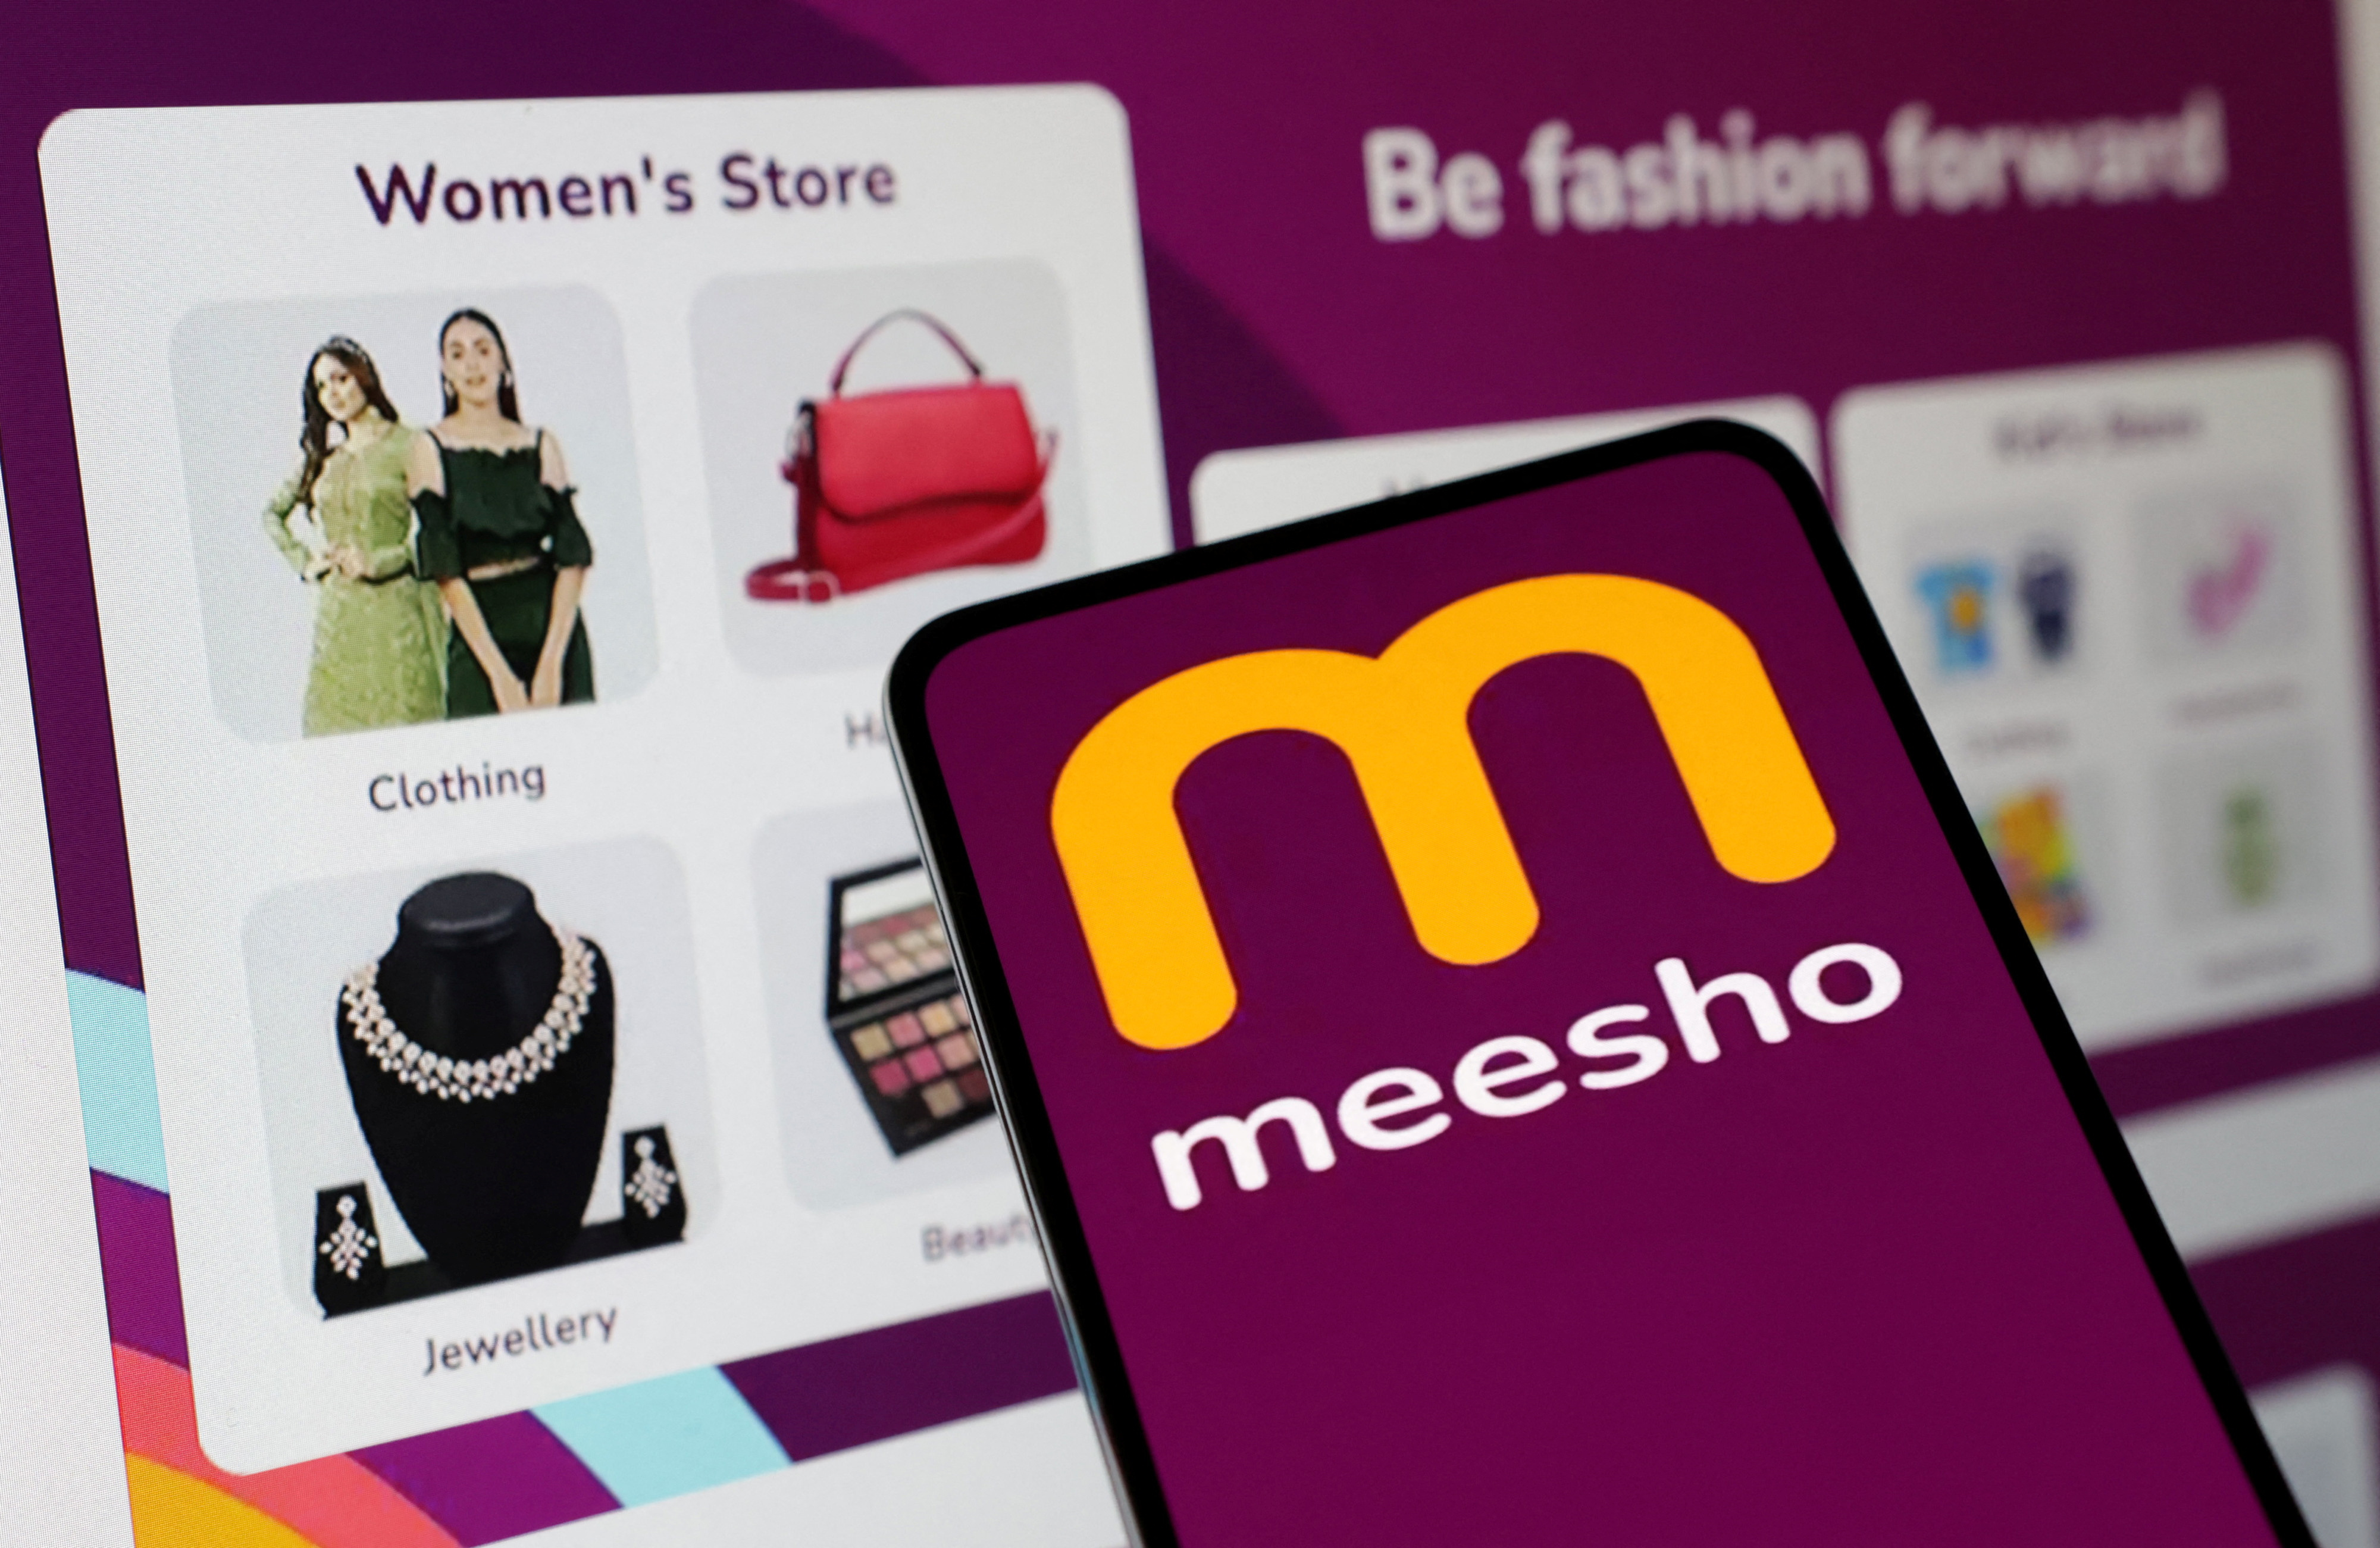 Illustration shows Meesho logo